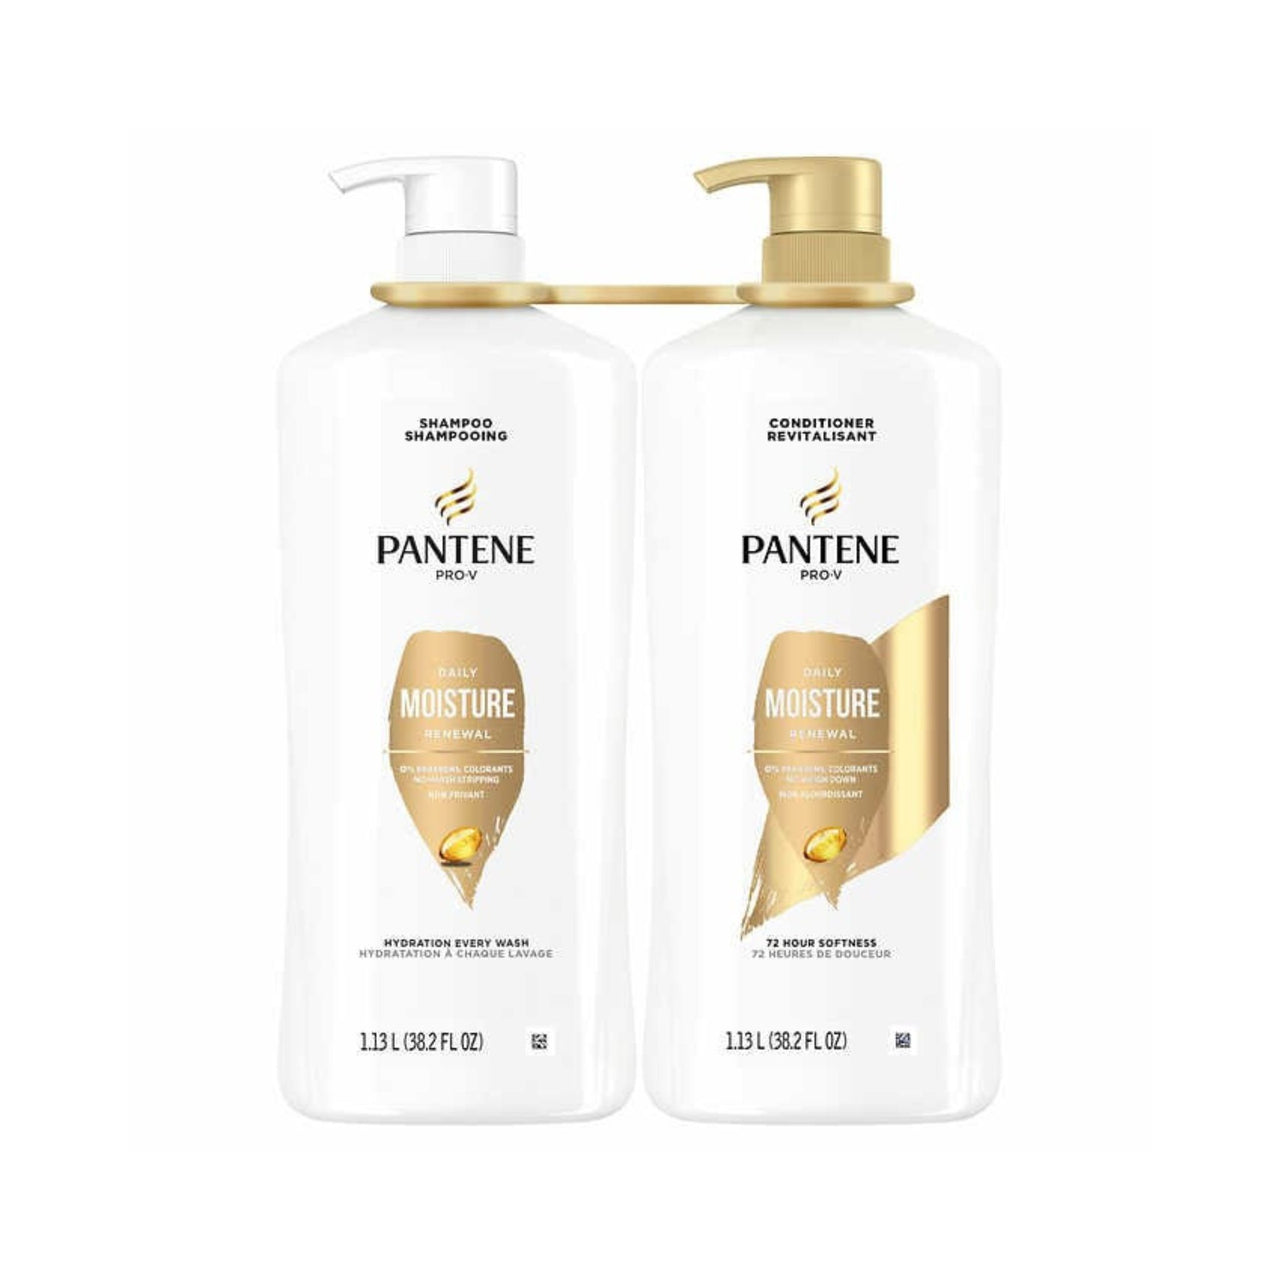 Image of Pantene Pro-V Shampoo and Conditioner